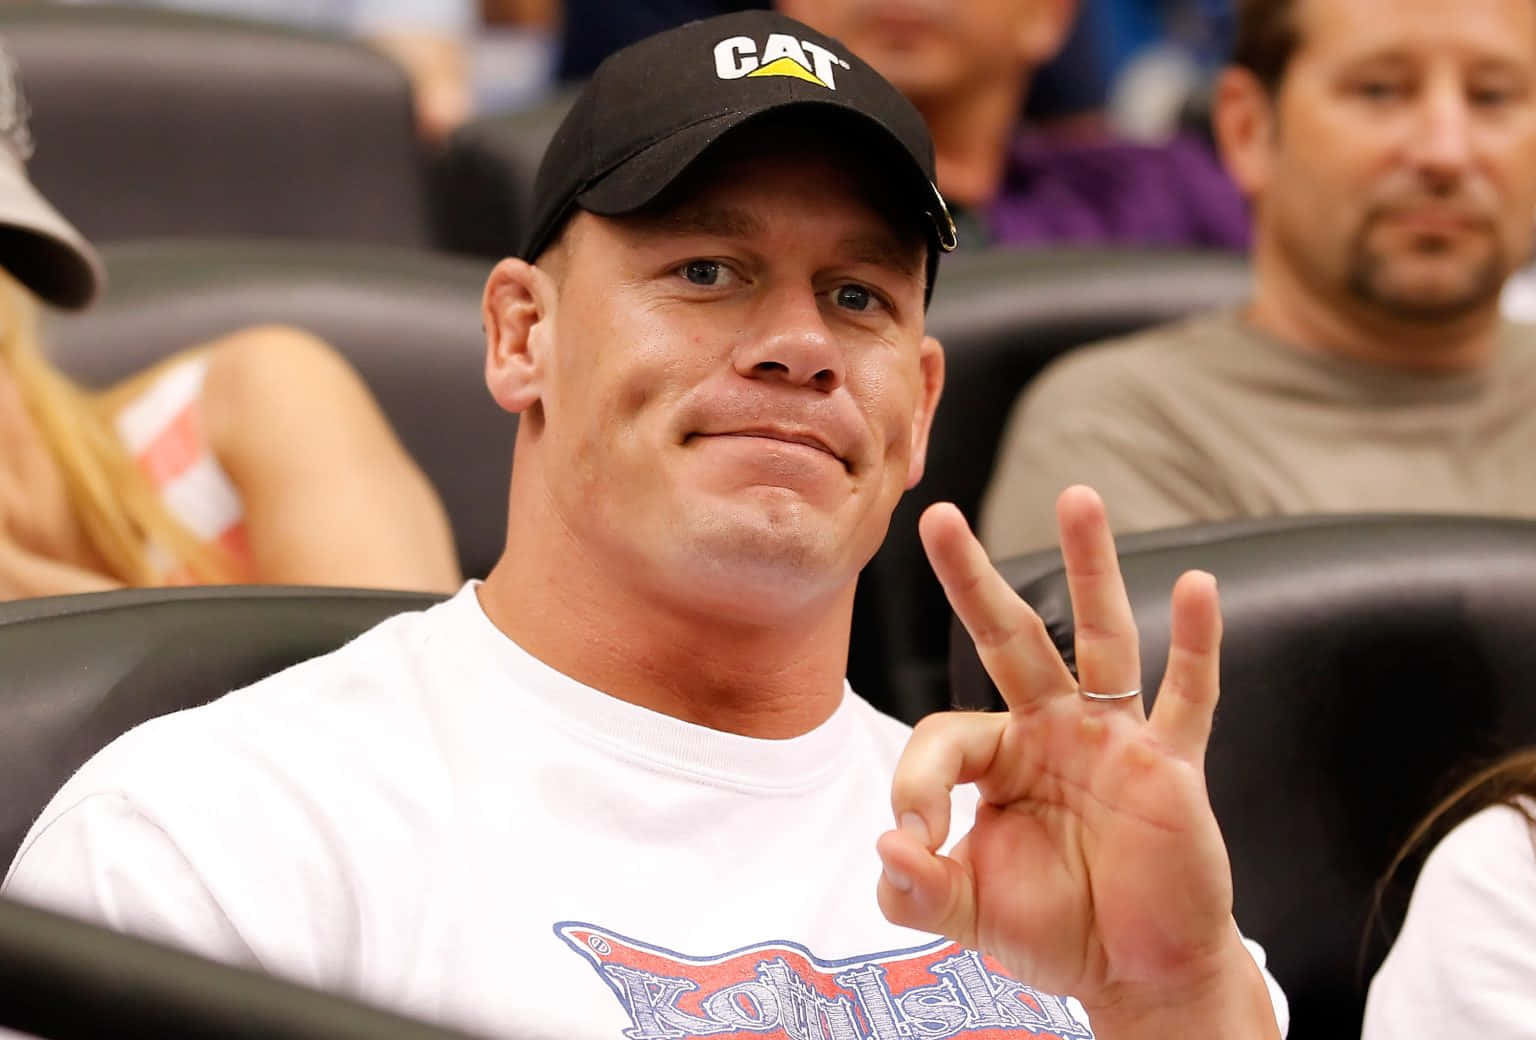 John Cena striking a pose at WWE event.